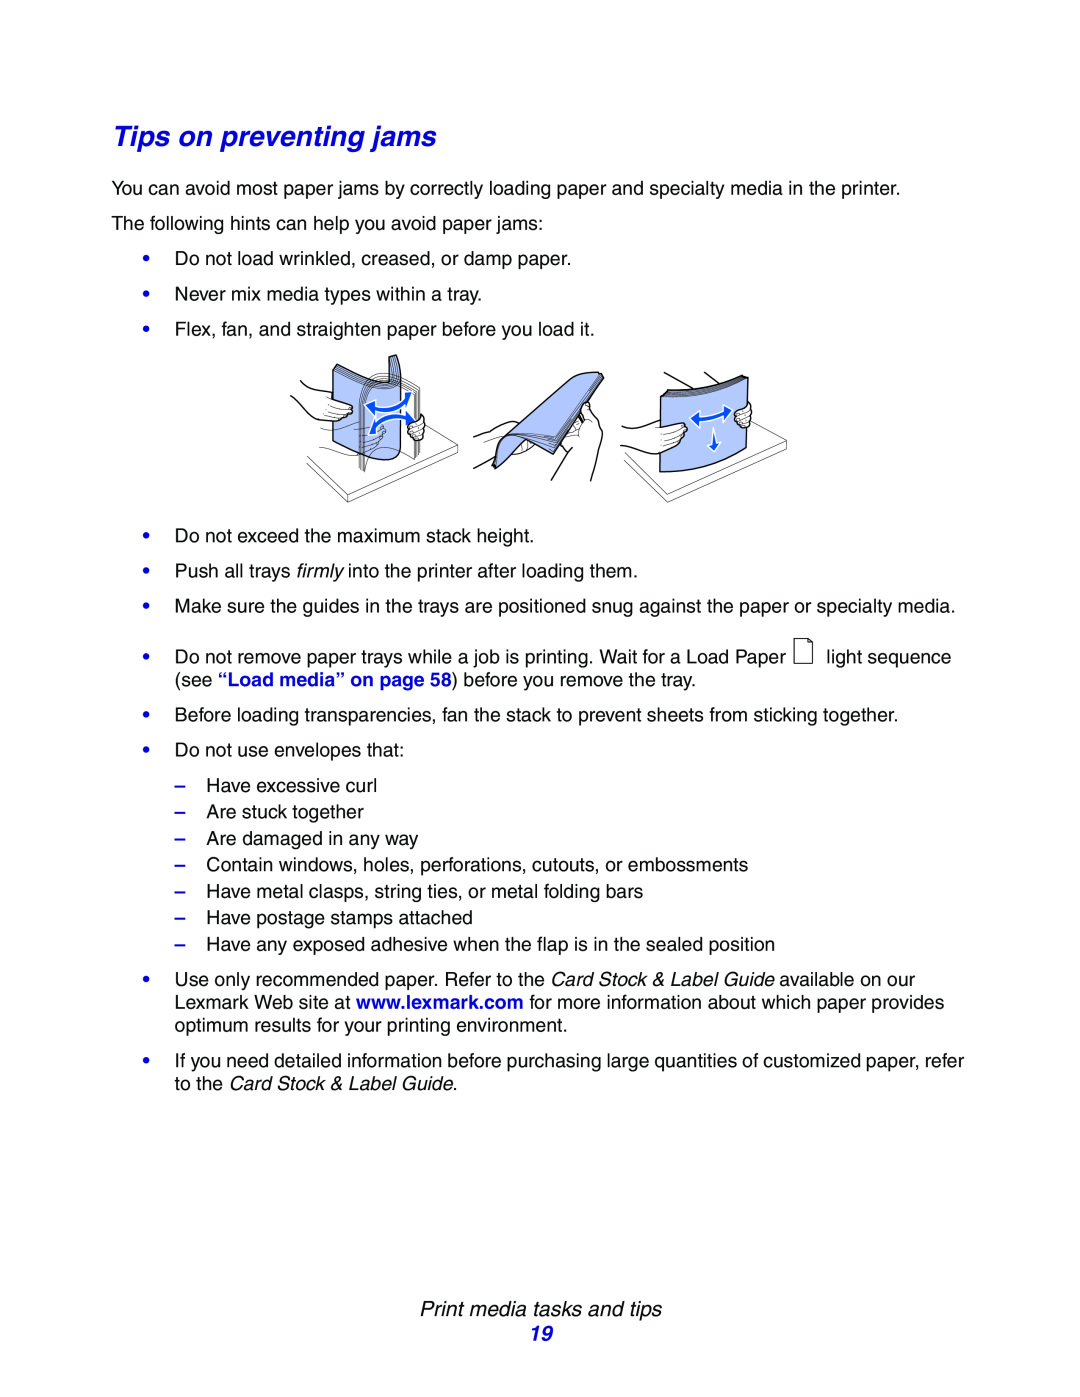 Lexmark E234N manual Tips on preventing jams, Print media tasks and tips 